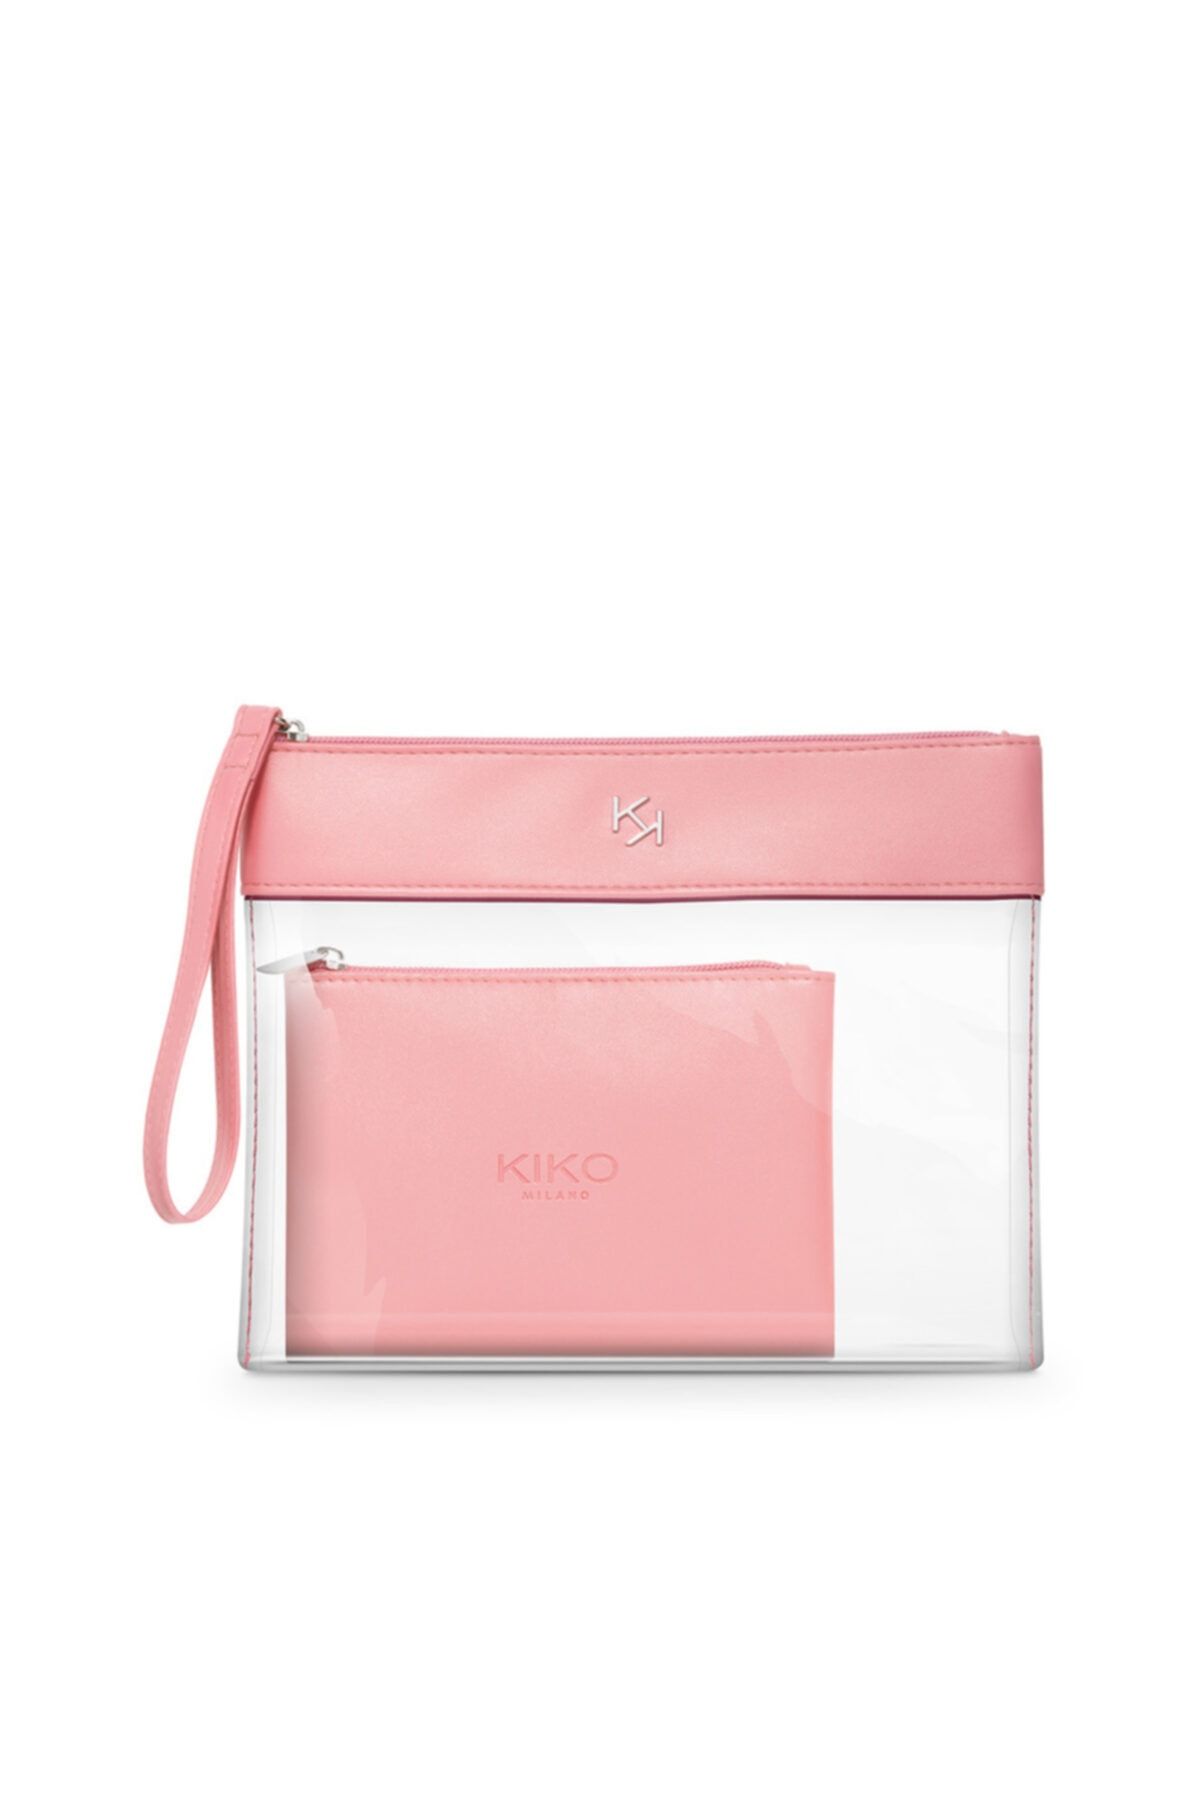 KIKO Makyaj Çantası - Transparent Beauty Case 003 Pink 01